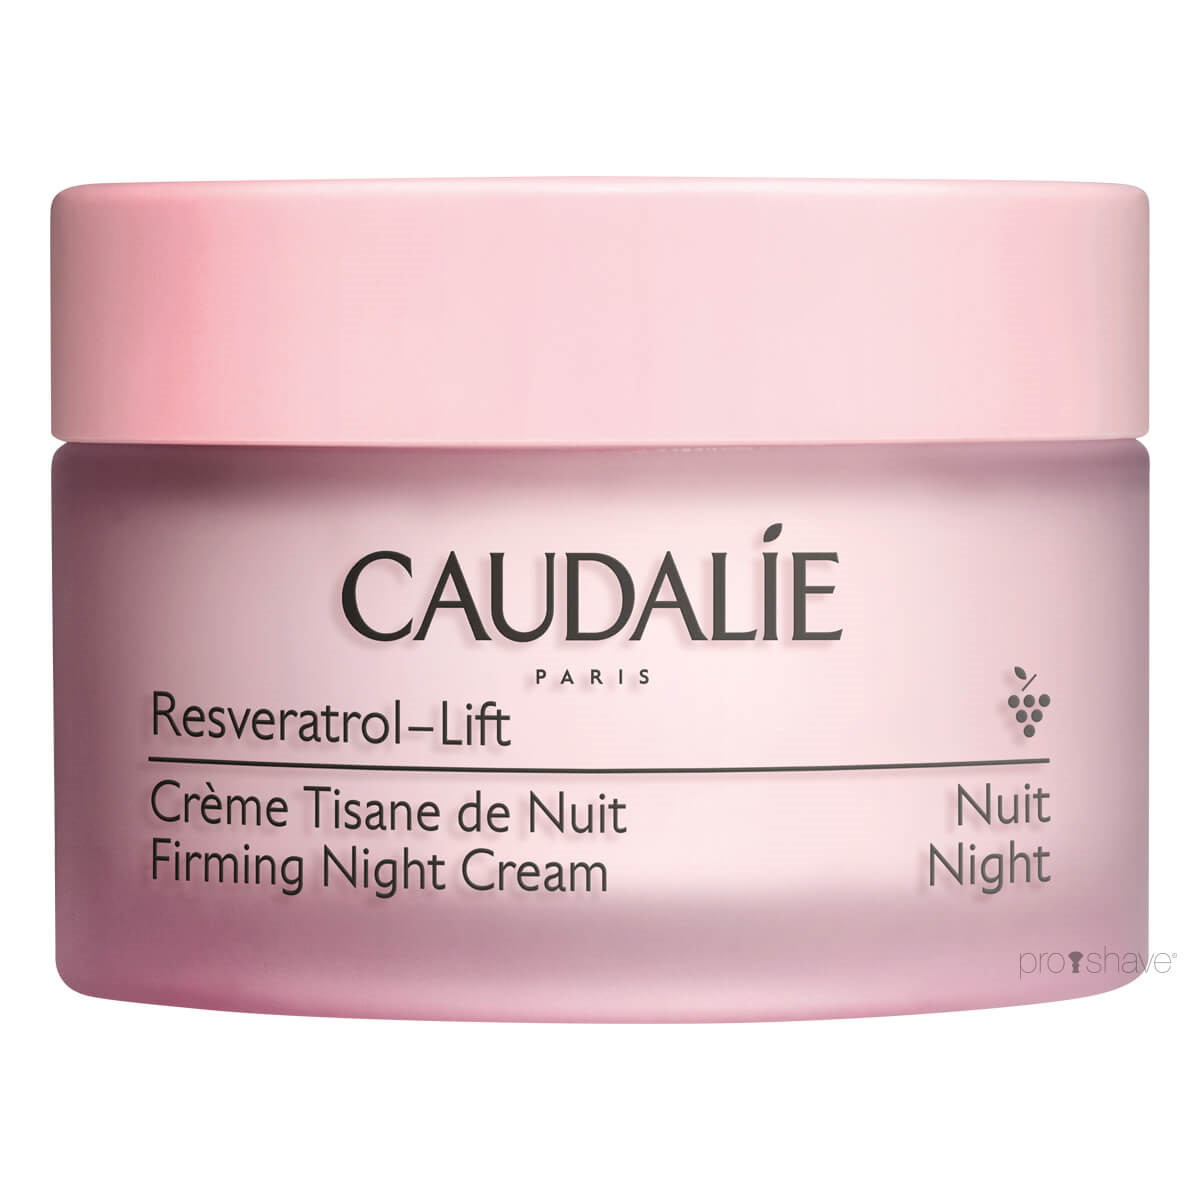 Se Caudalie Resveratrol Lift, Firming Night Cream, 50 ml. hos Proshave